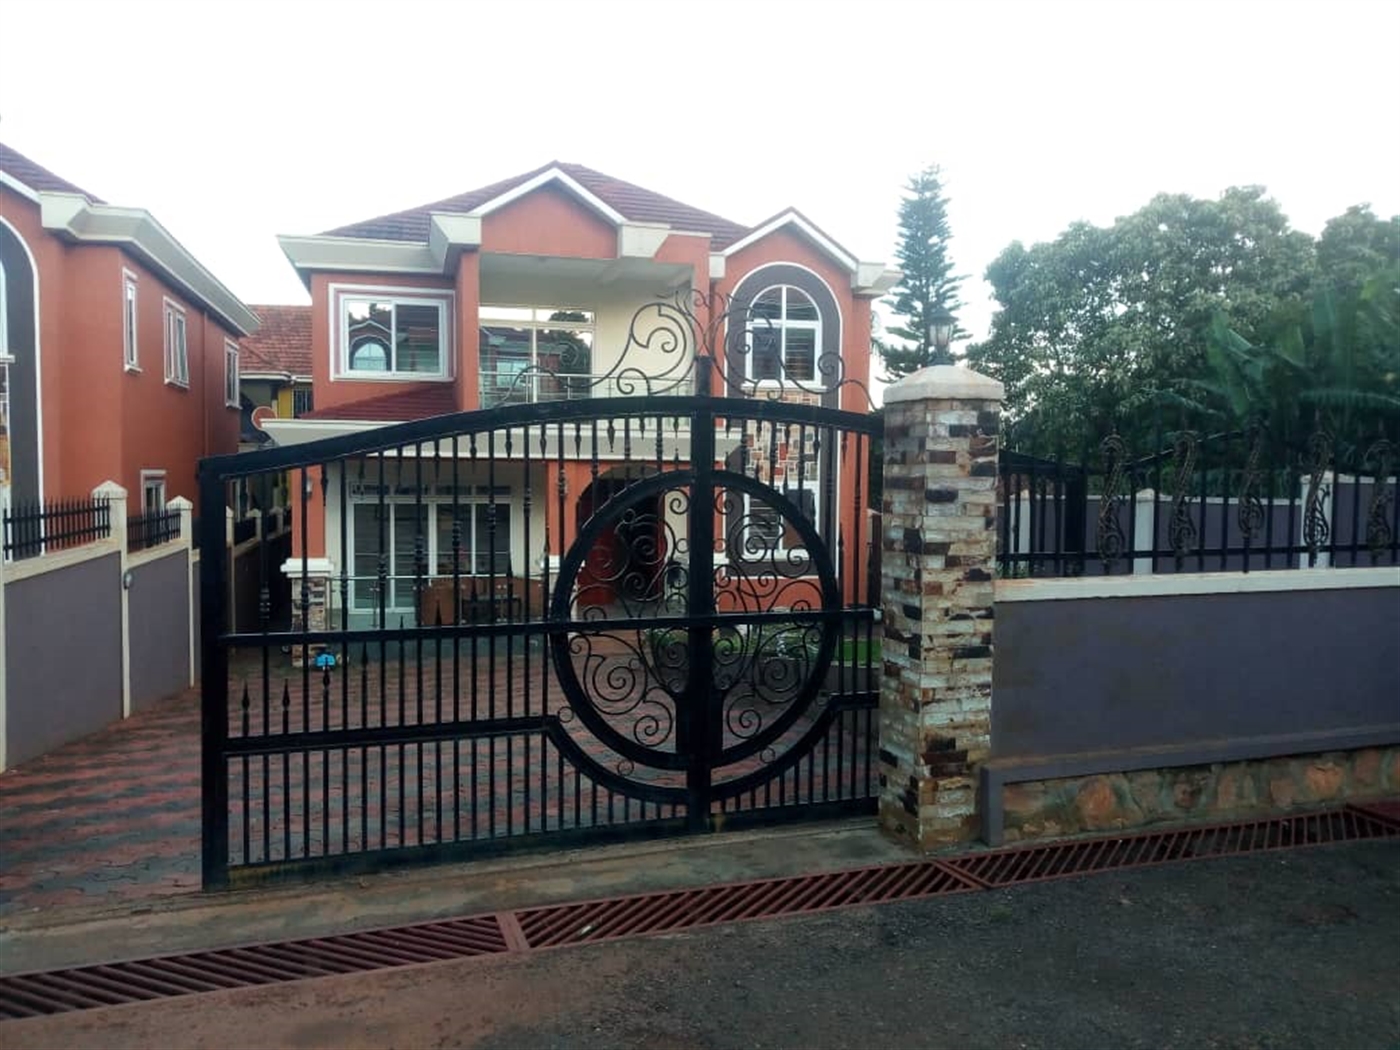 Town House for sale in Nsambya Kampala